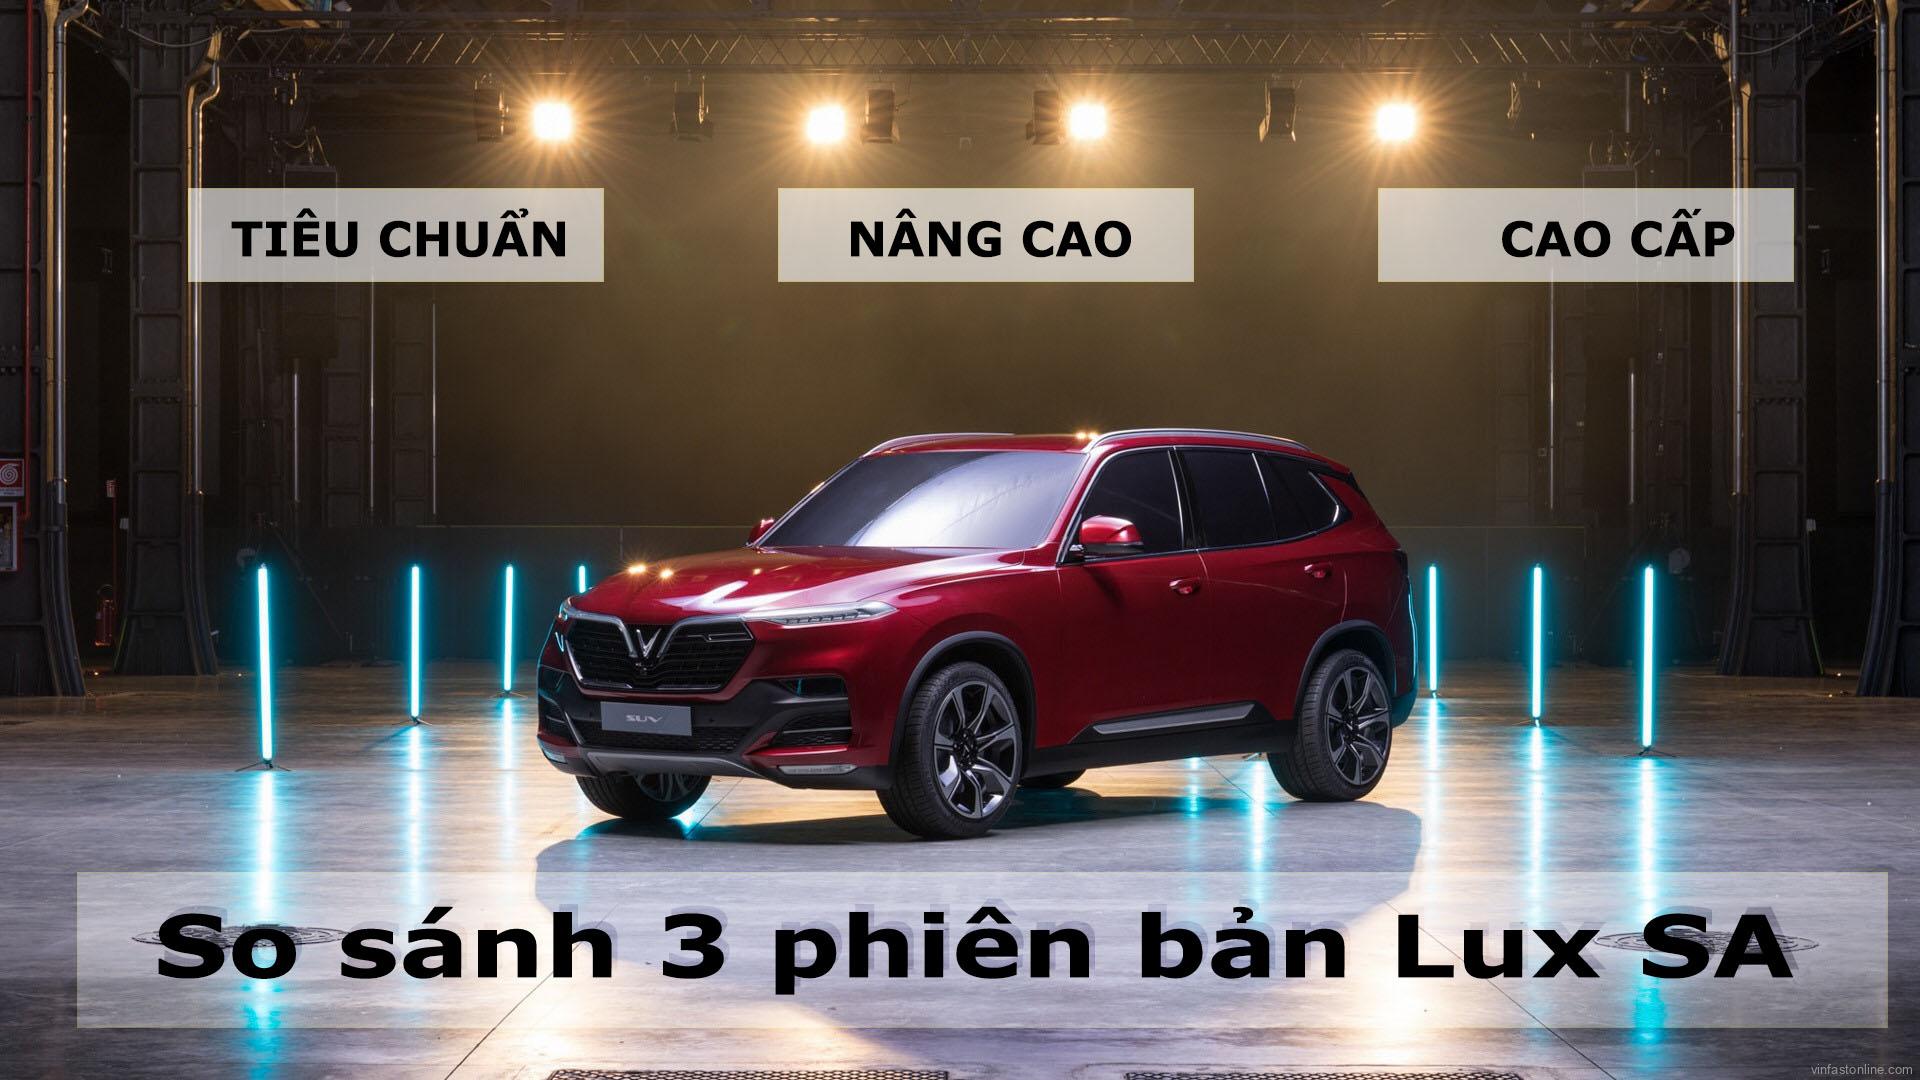 So Sanh 3 Phien Ban Lux Sa 2.0 Turbo